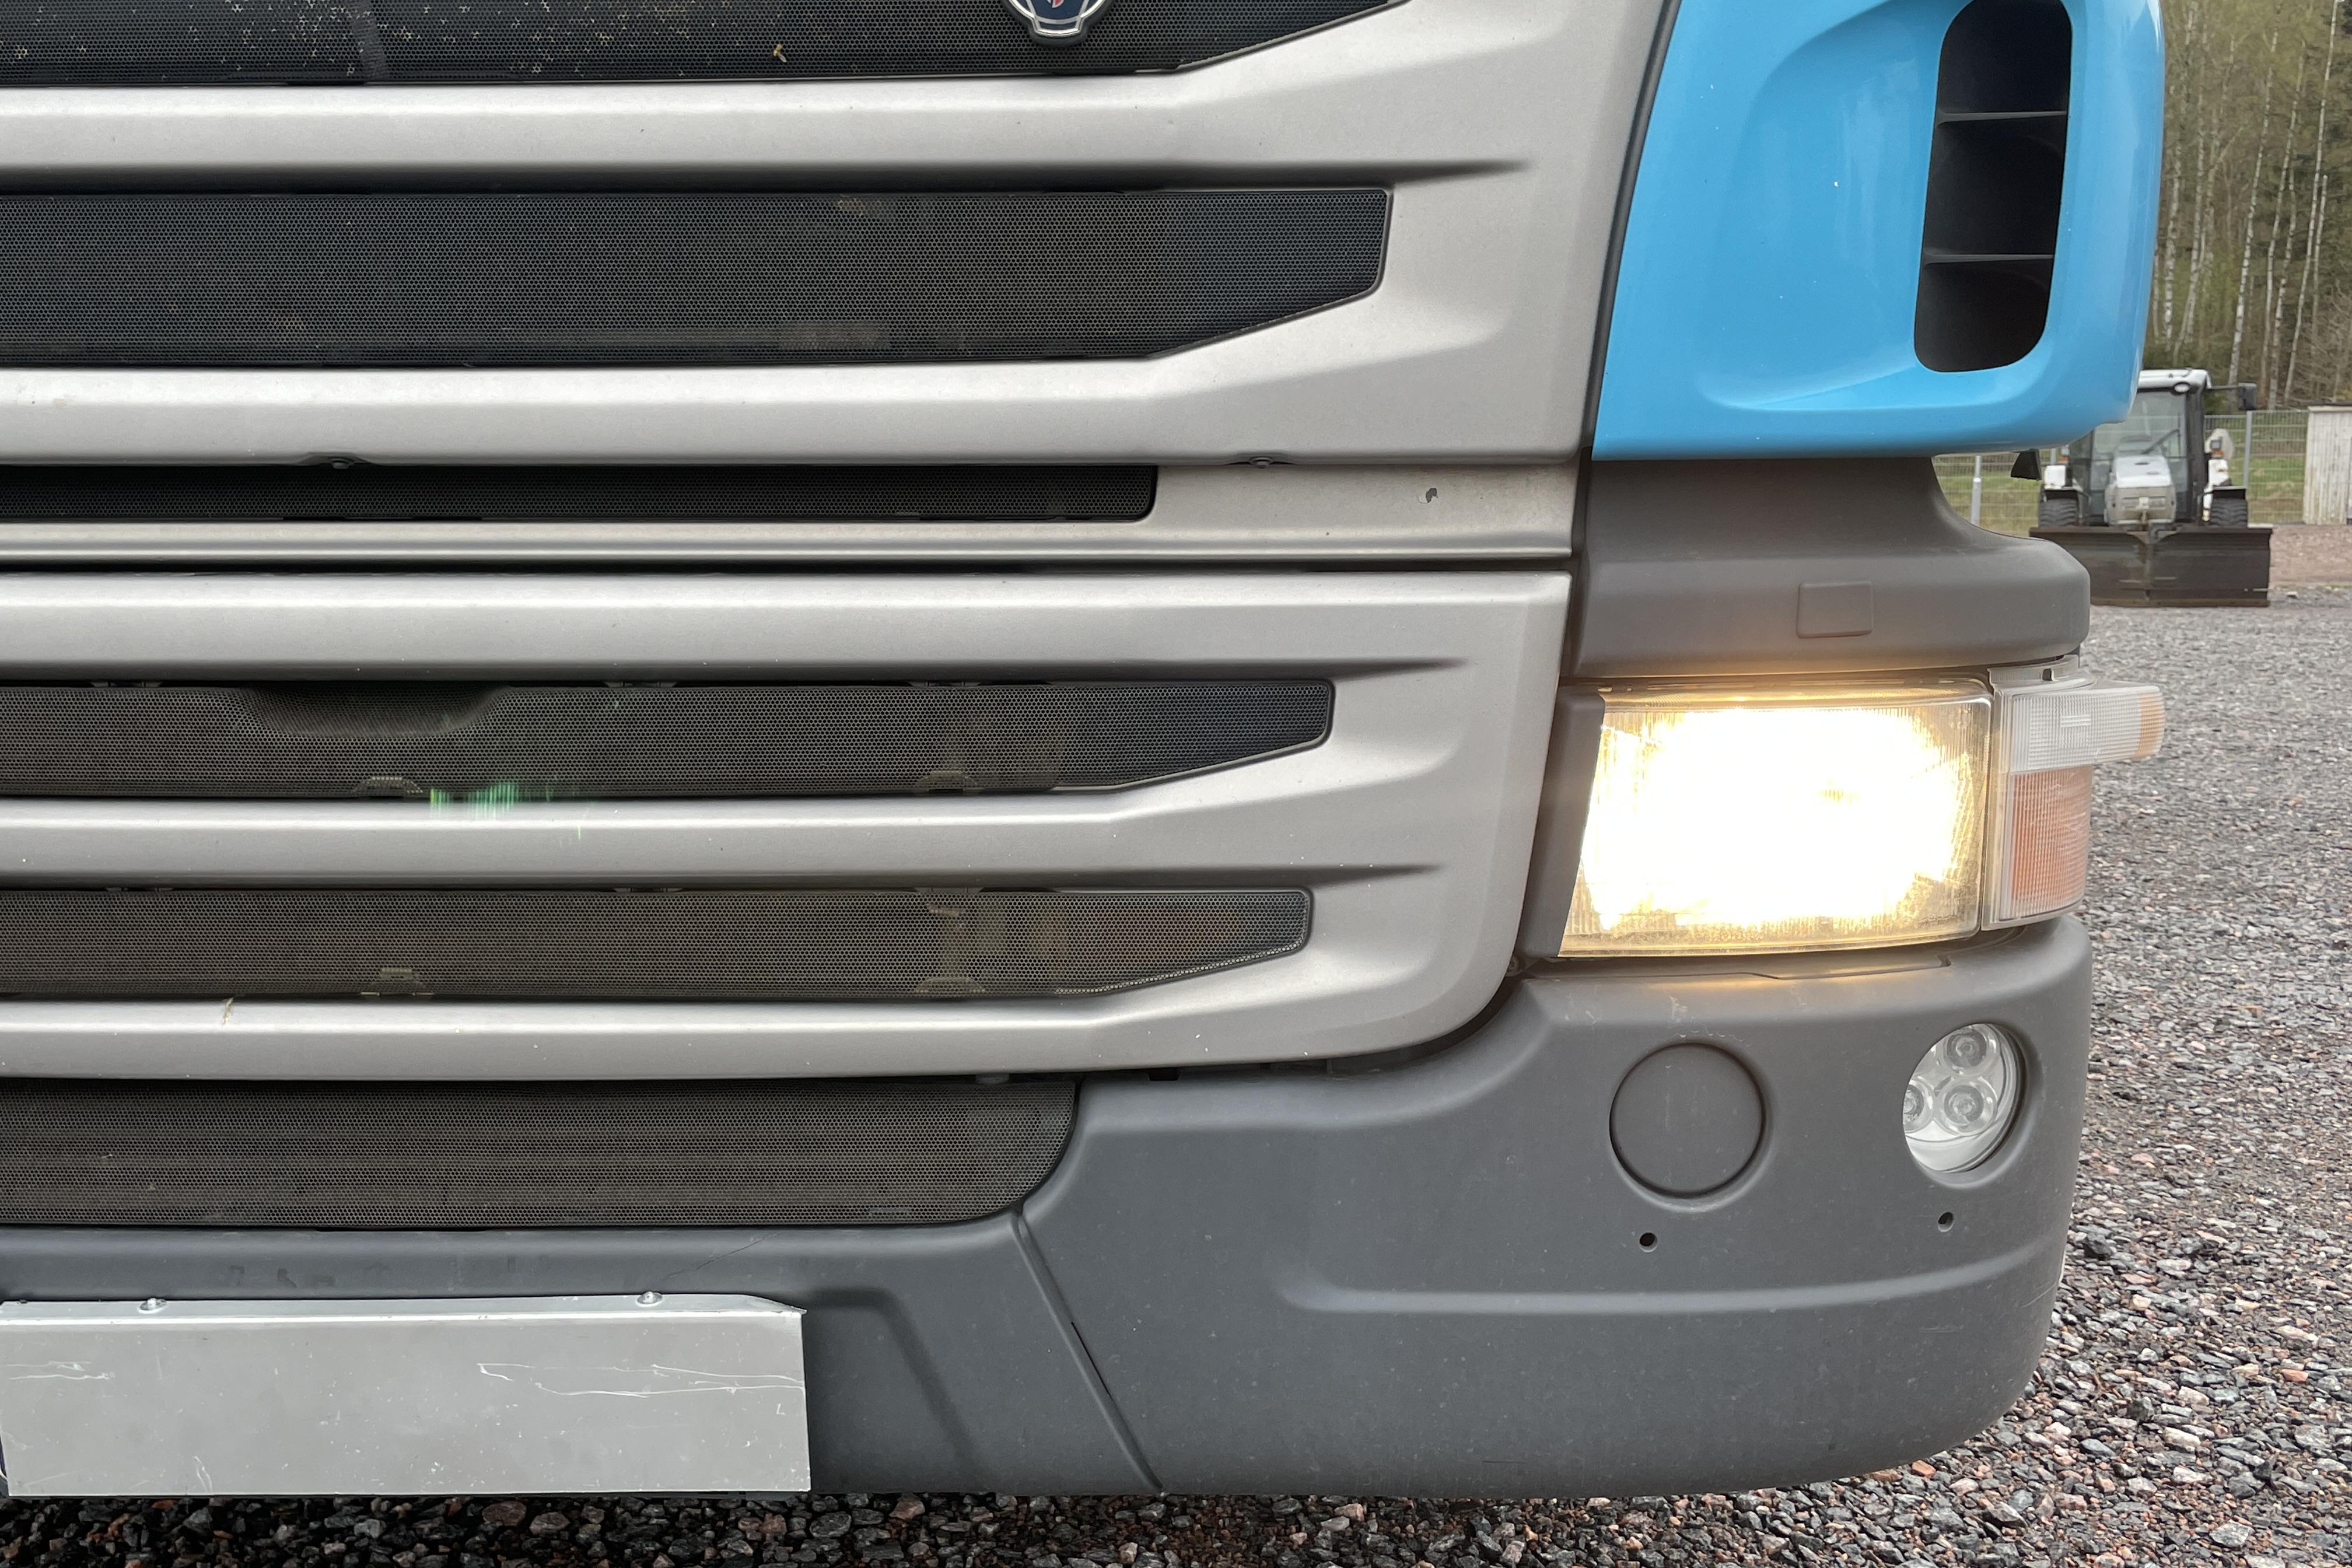 Scania P230 - 661 640 km - Automatic - blue - 2013